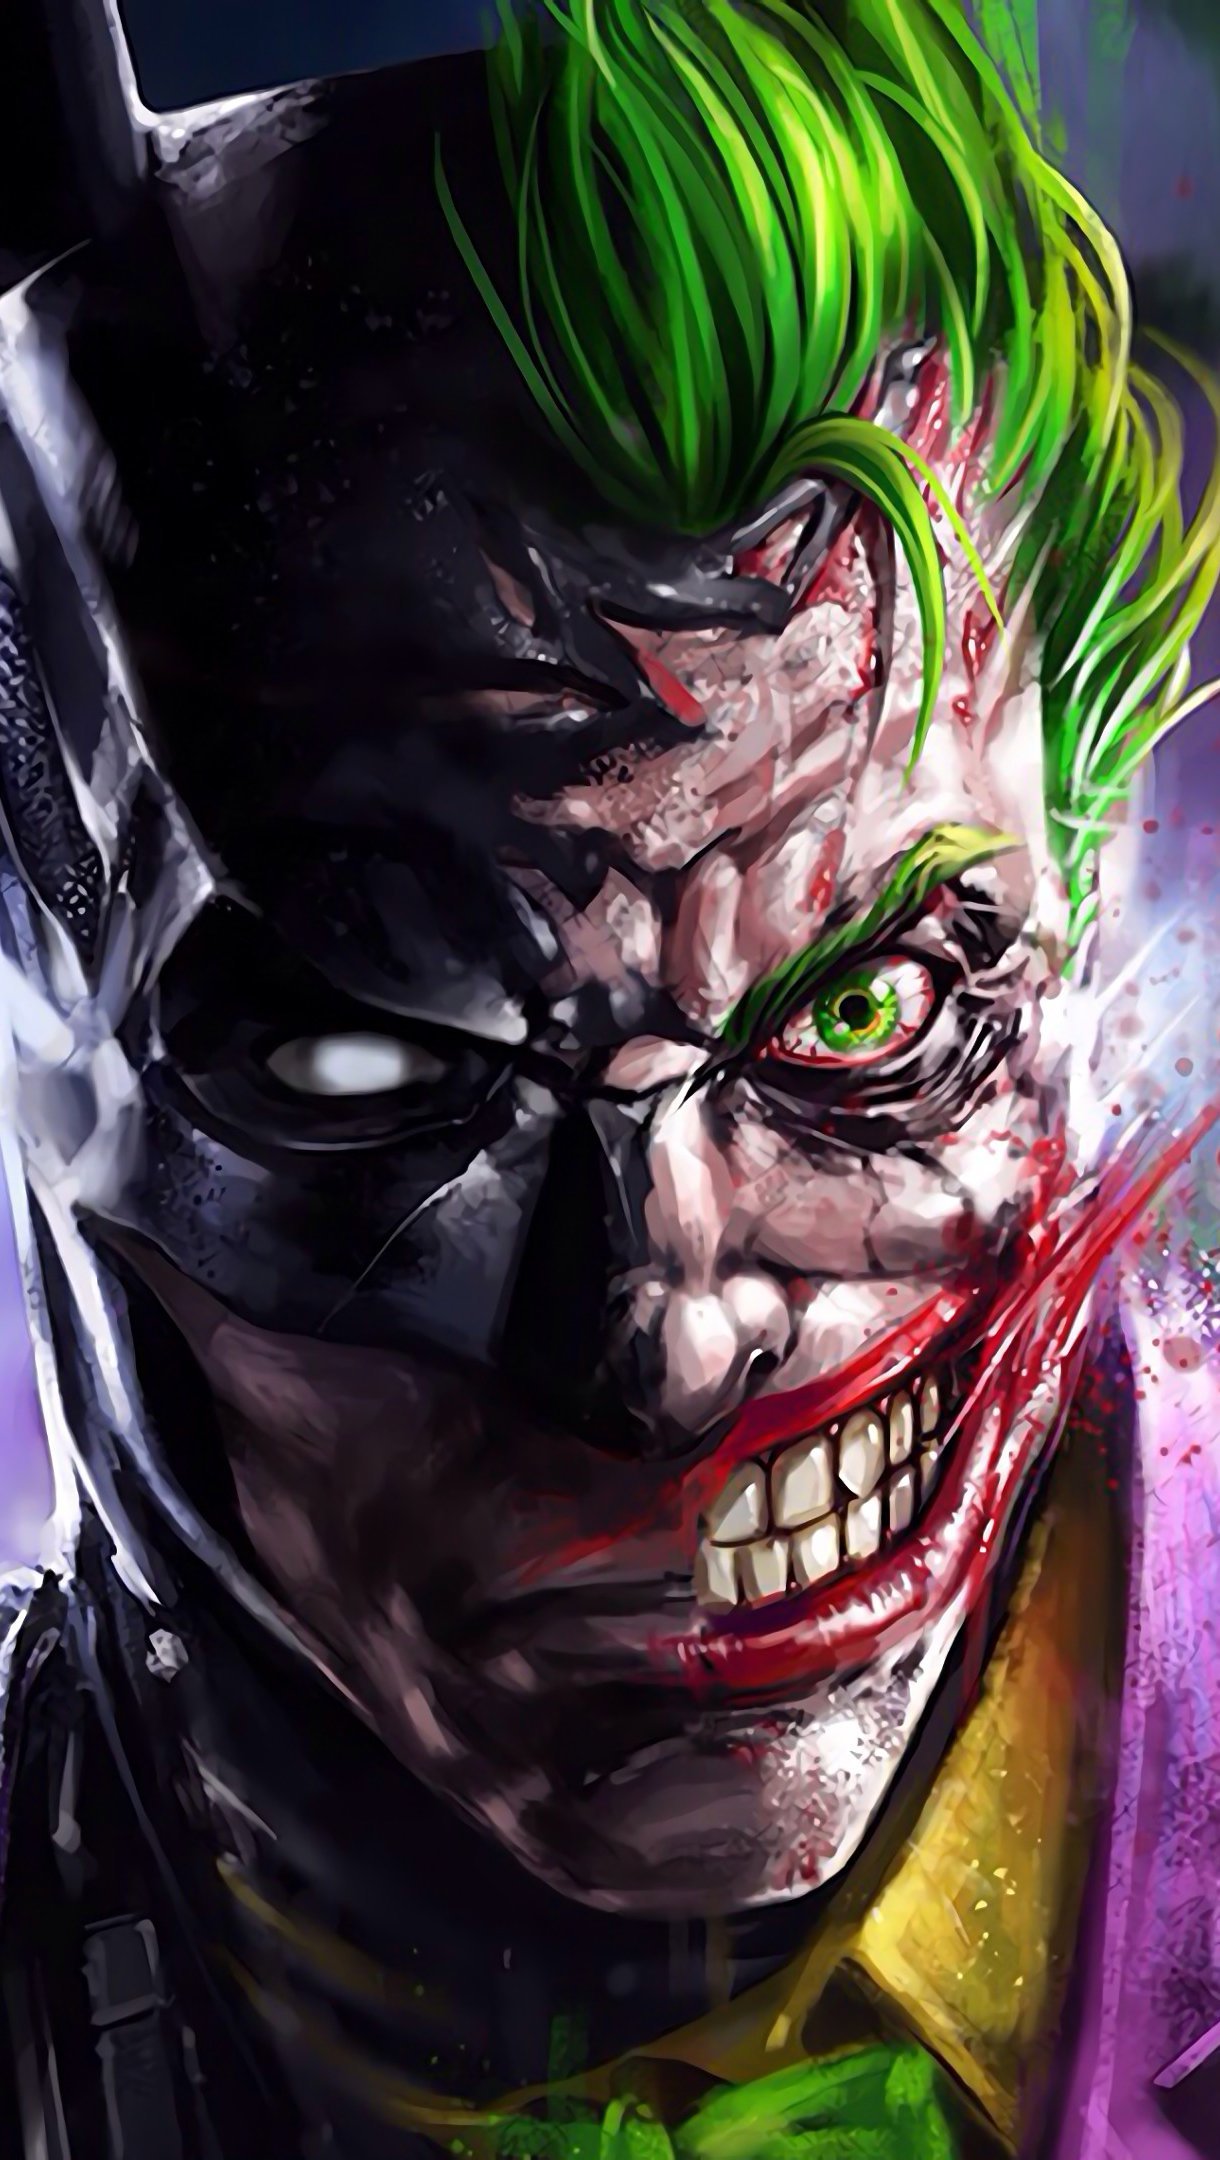 Batman and Joker Wallpaper 4k Ultra HD ID:3804